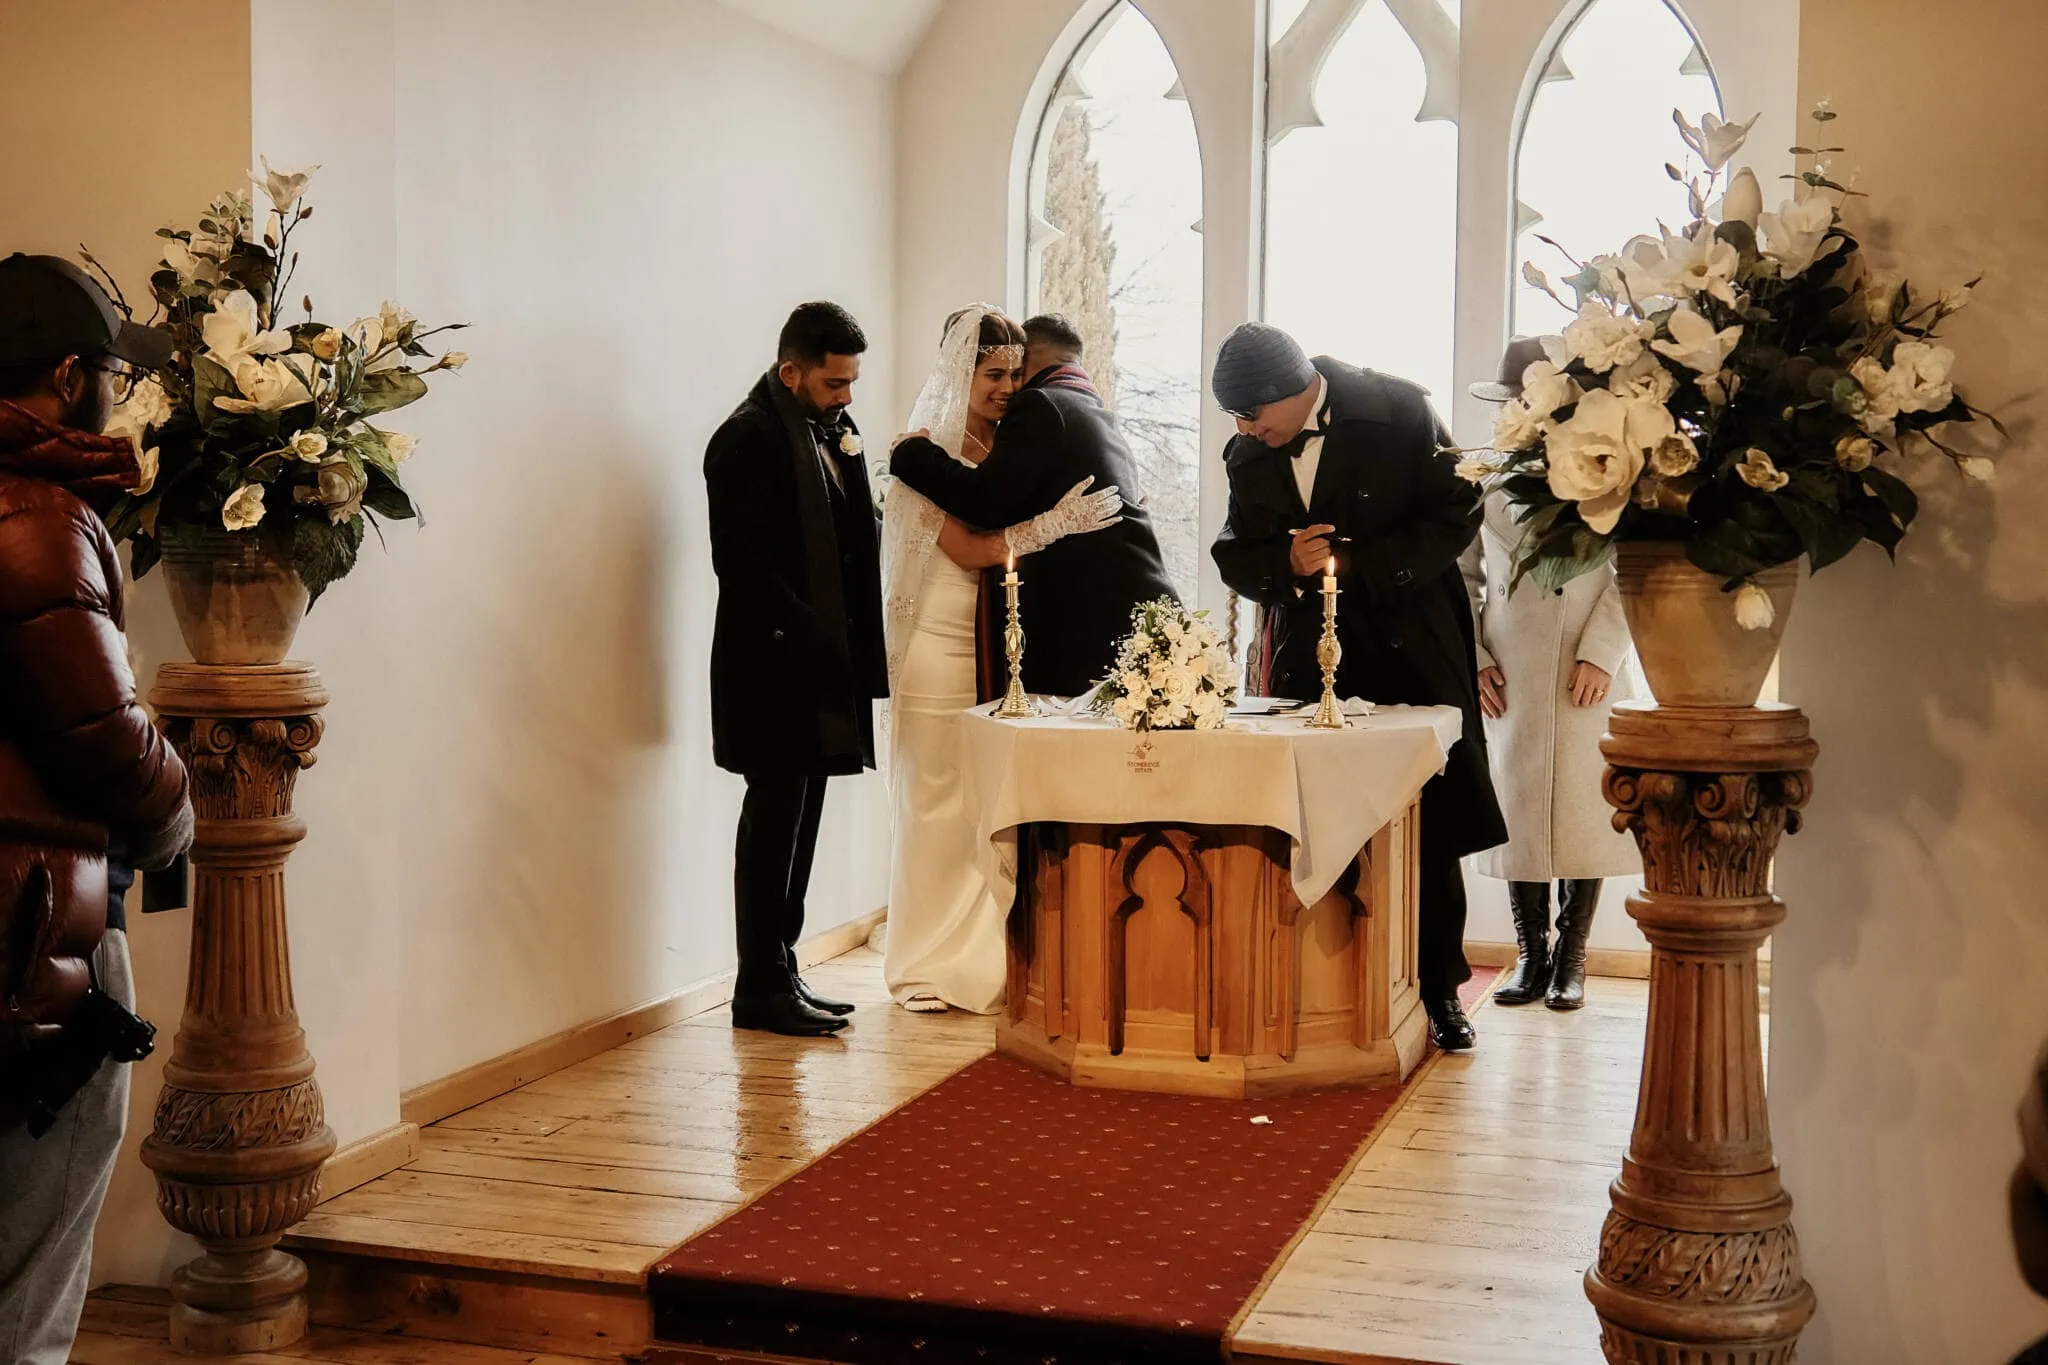 Queenstown New Zealand Elopement Wedding Photographer - Wasim and Yumn's Queenstown Islamic wedding ceremony in a church.